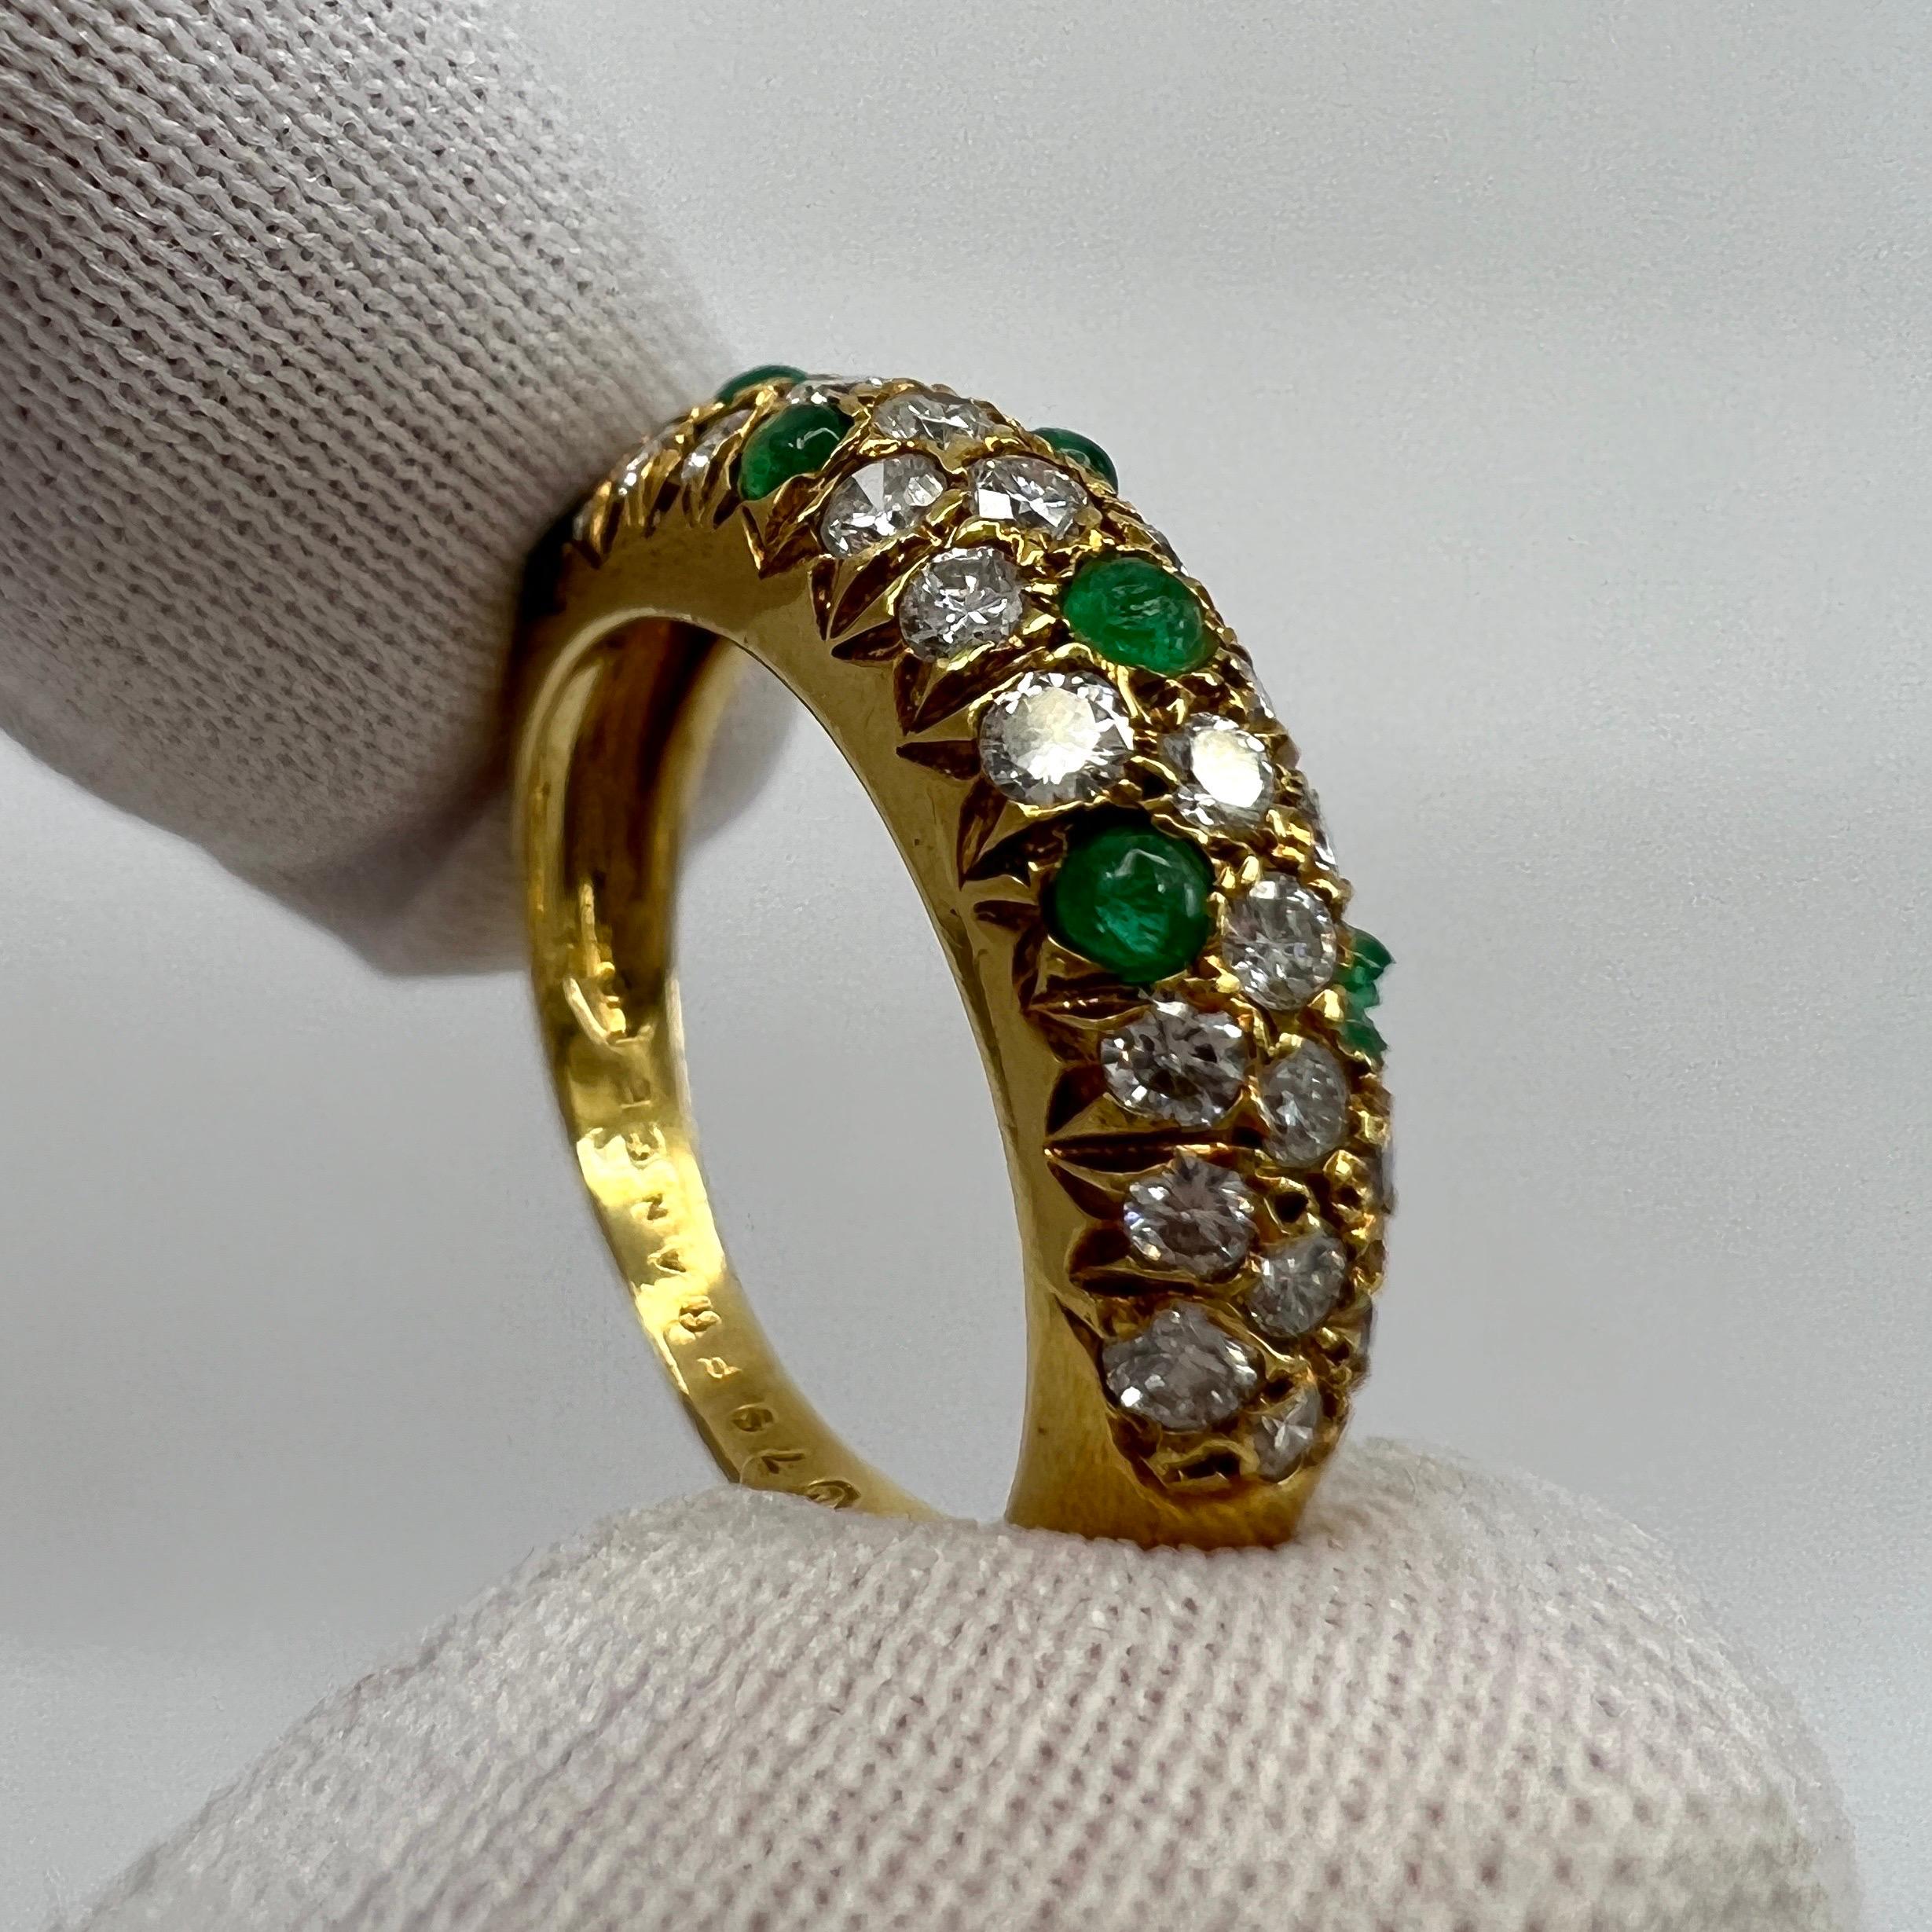 Very Rare Vintage Van Cleef & Arpels 18k Yellow Gold Emerald & Diamond Pave Ring 6